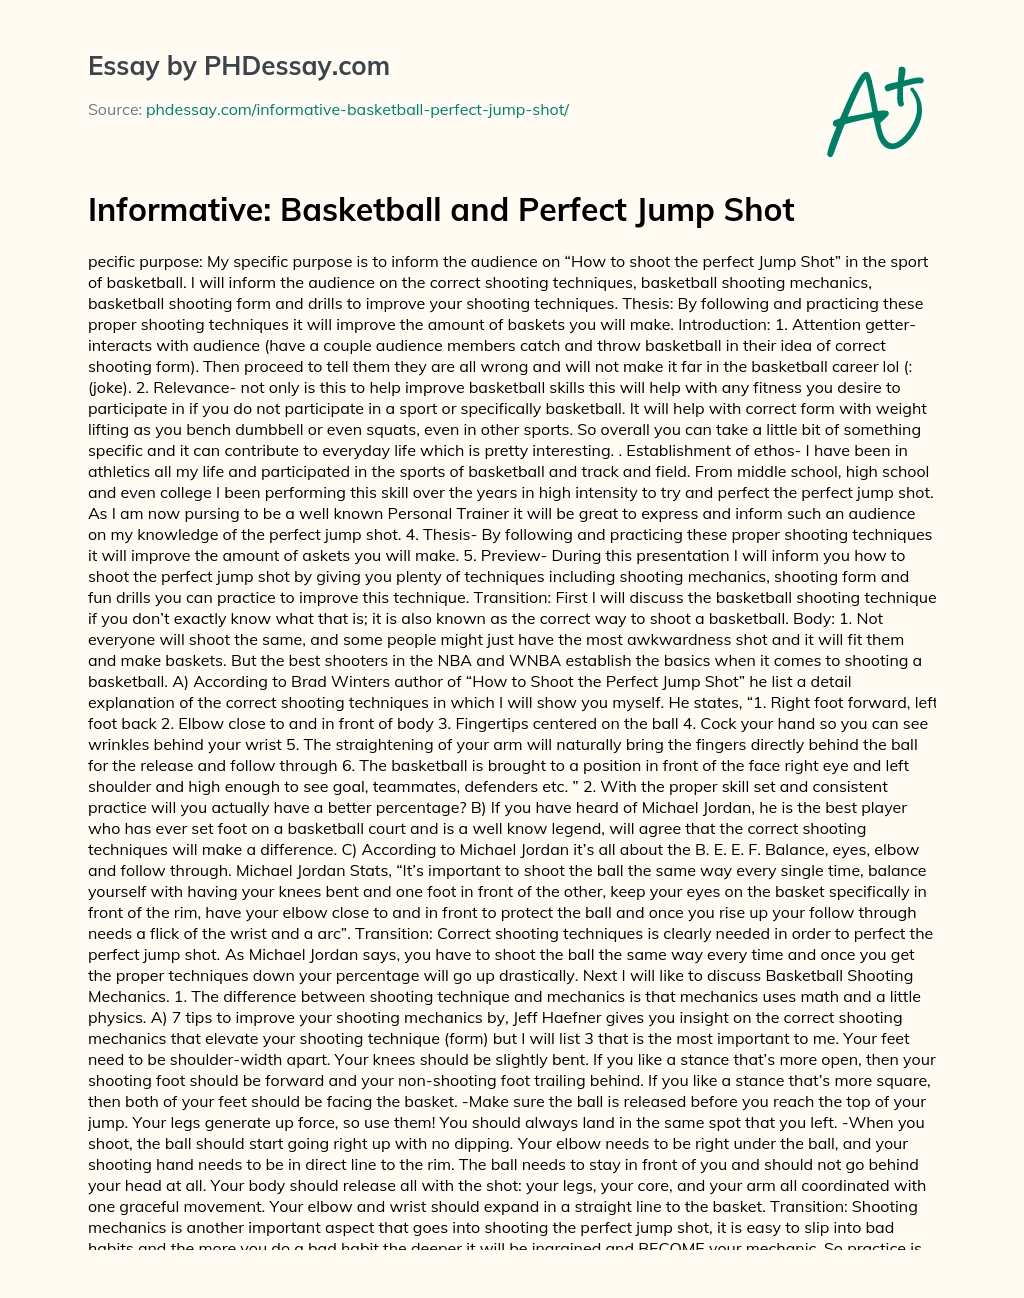 Informative: Basketball and Perfect Jump Shot essay